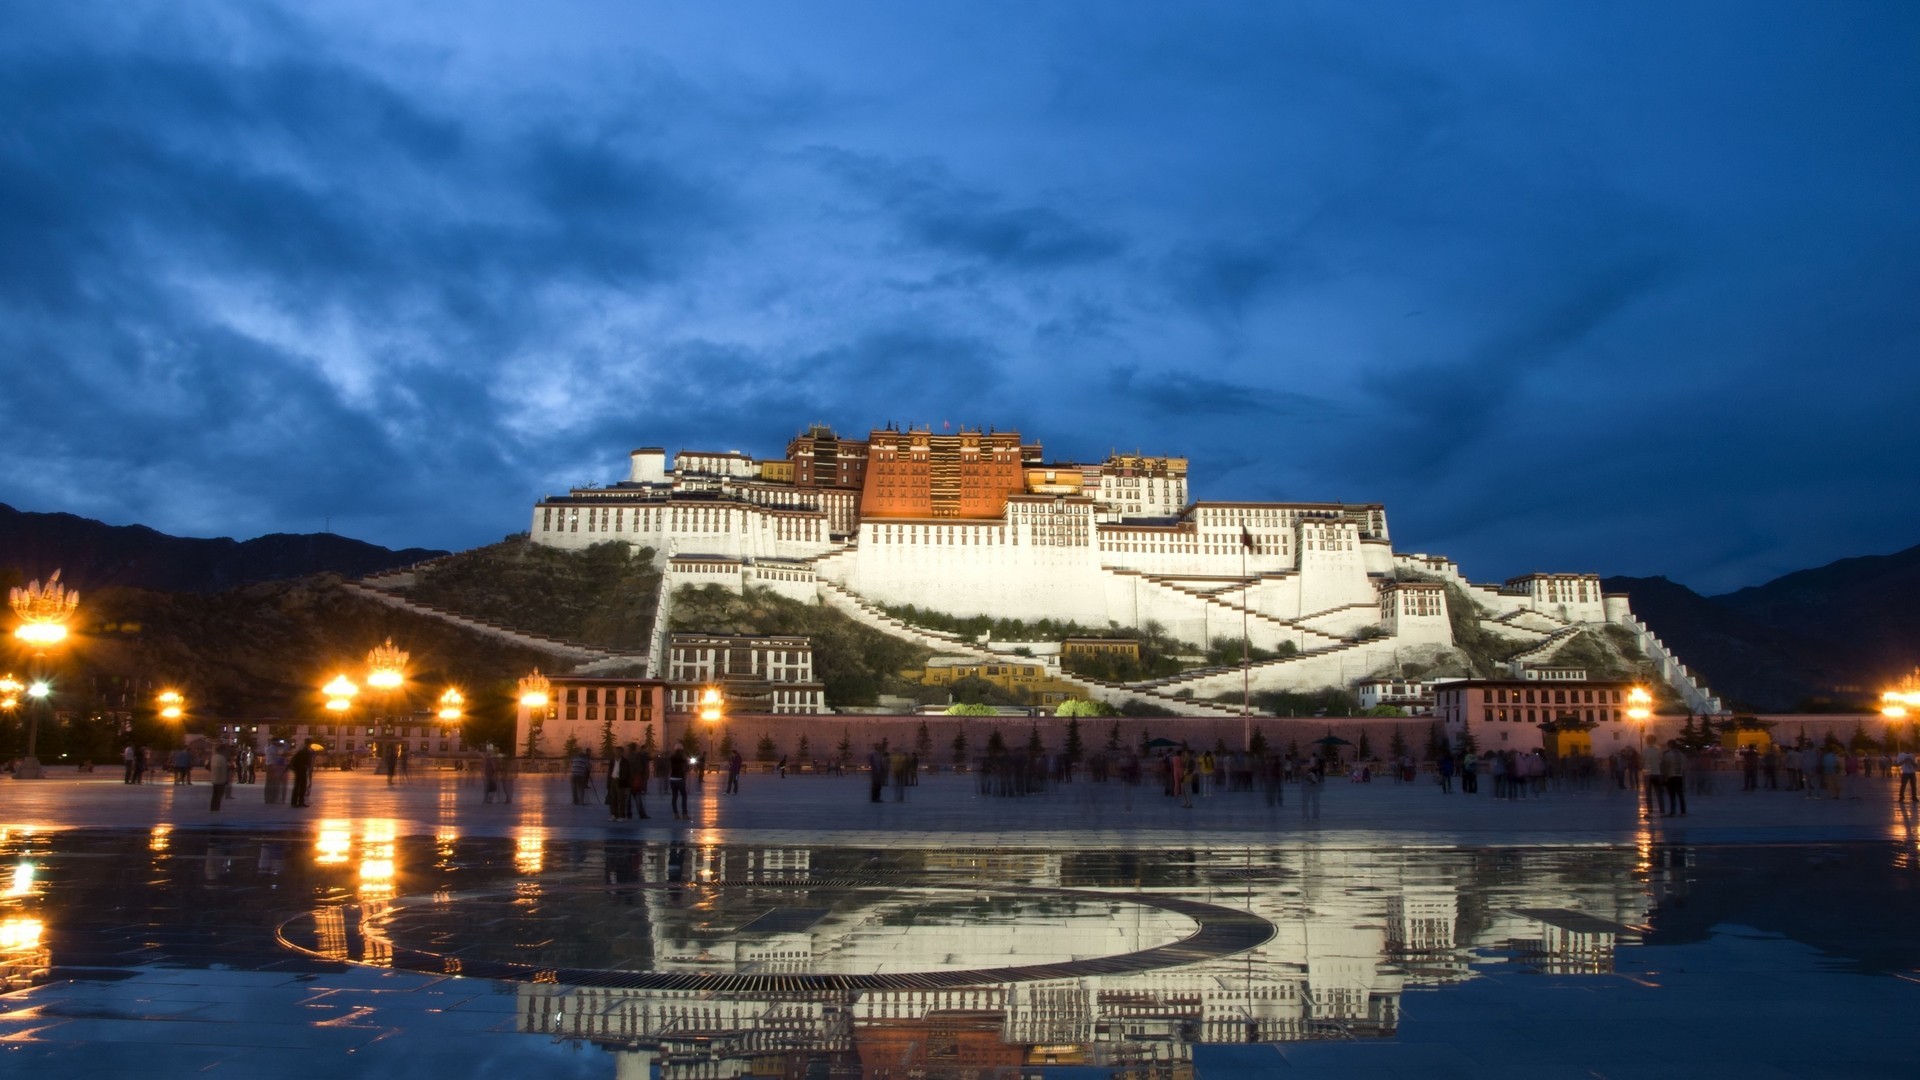 General 1920x1080 Tibet Potala Palace Lhasa Buddhism Asia reflection building